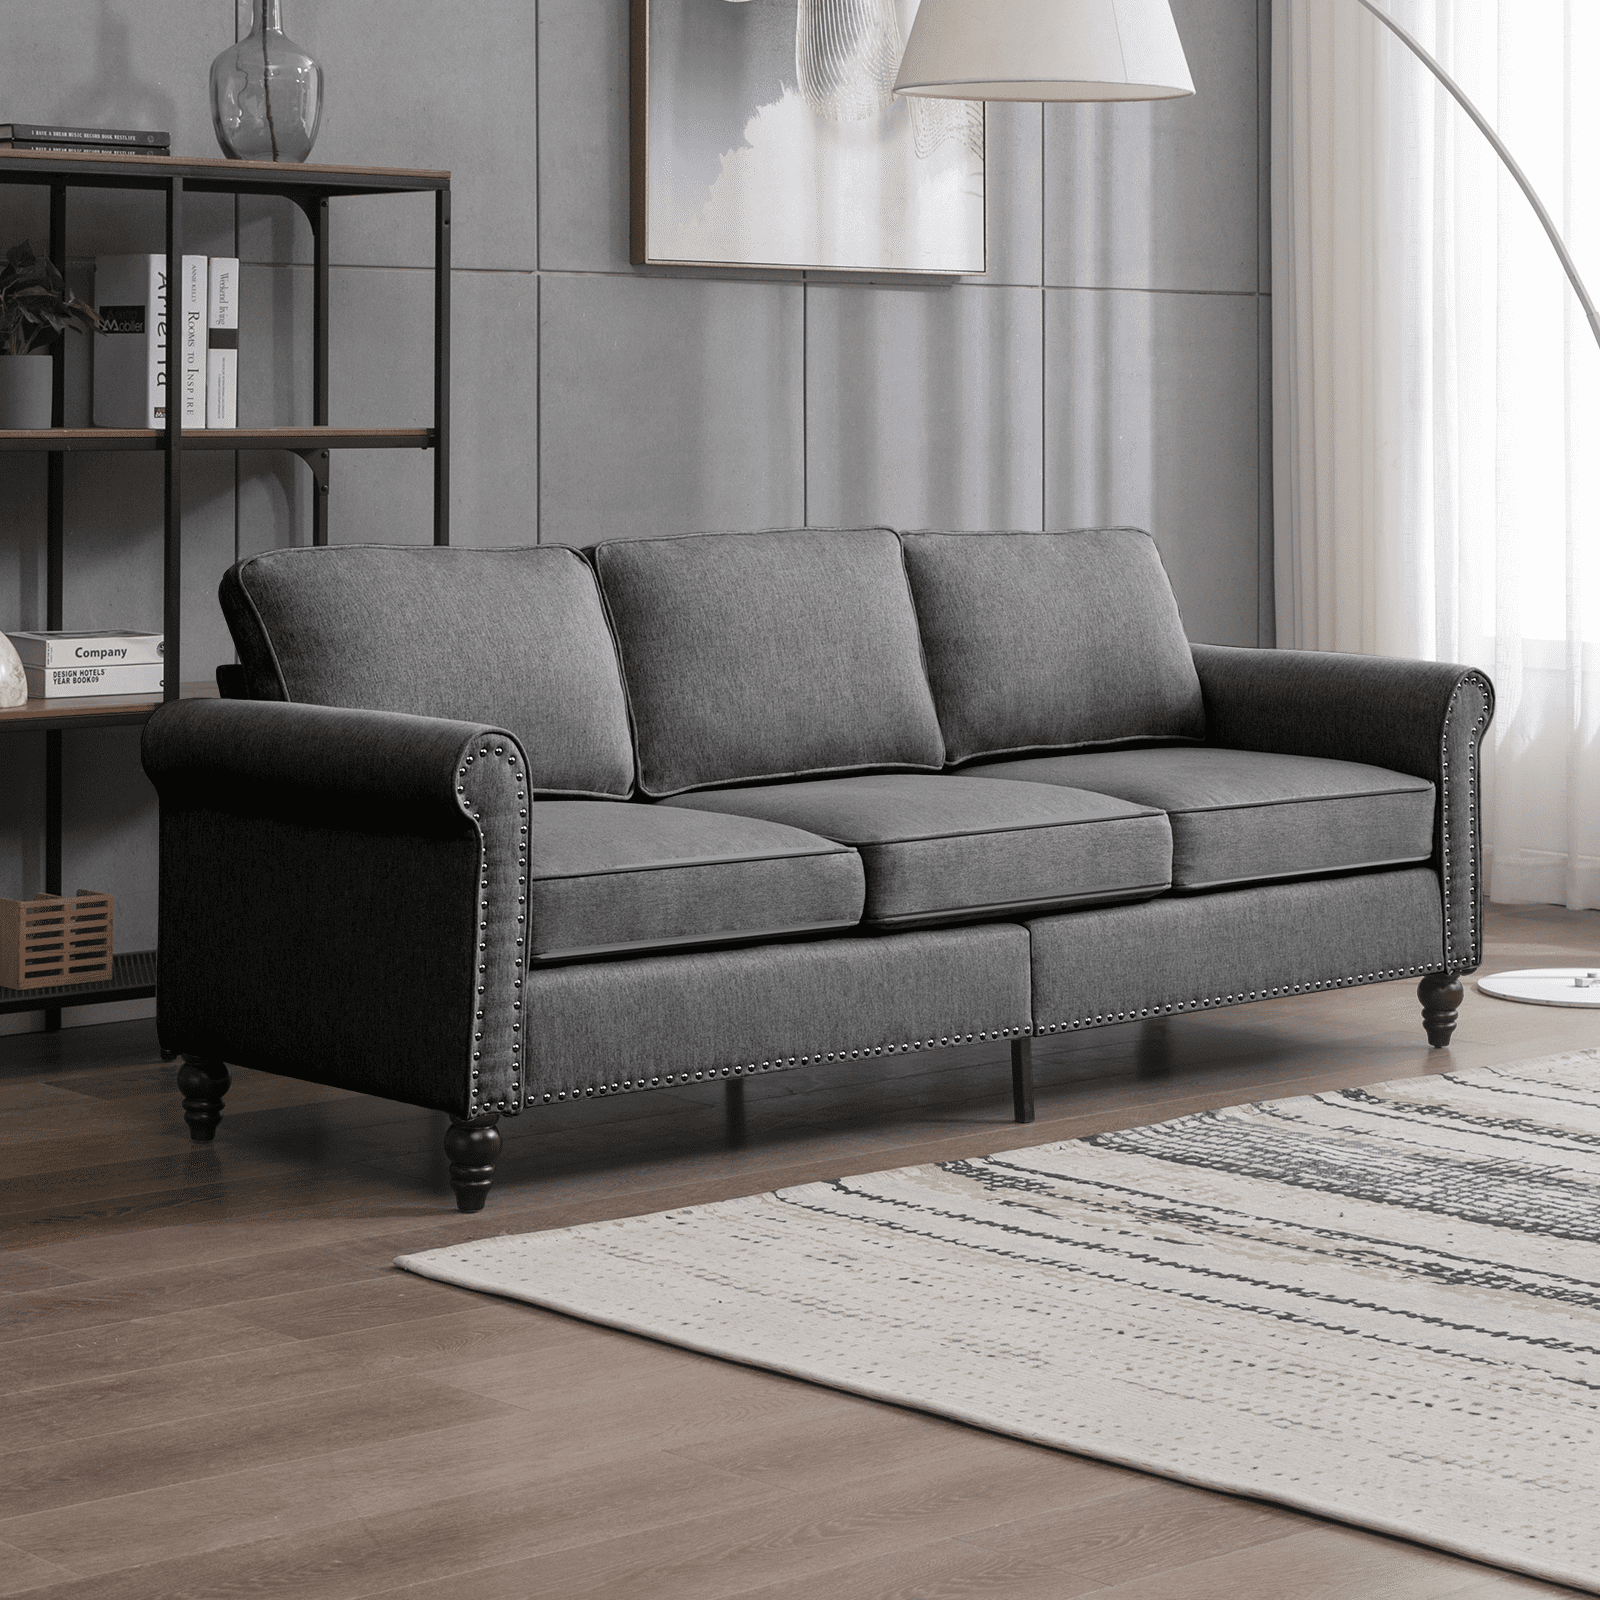 Mjkone Modern Linen 3 Seater Sofa Sleeper With 5 9 Upholstered Cushion For Apartment Living Room Bedroom Office Dark Grey Com